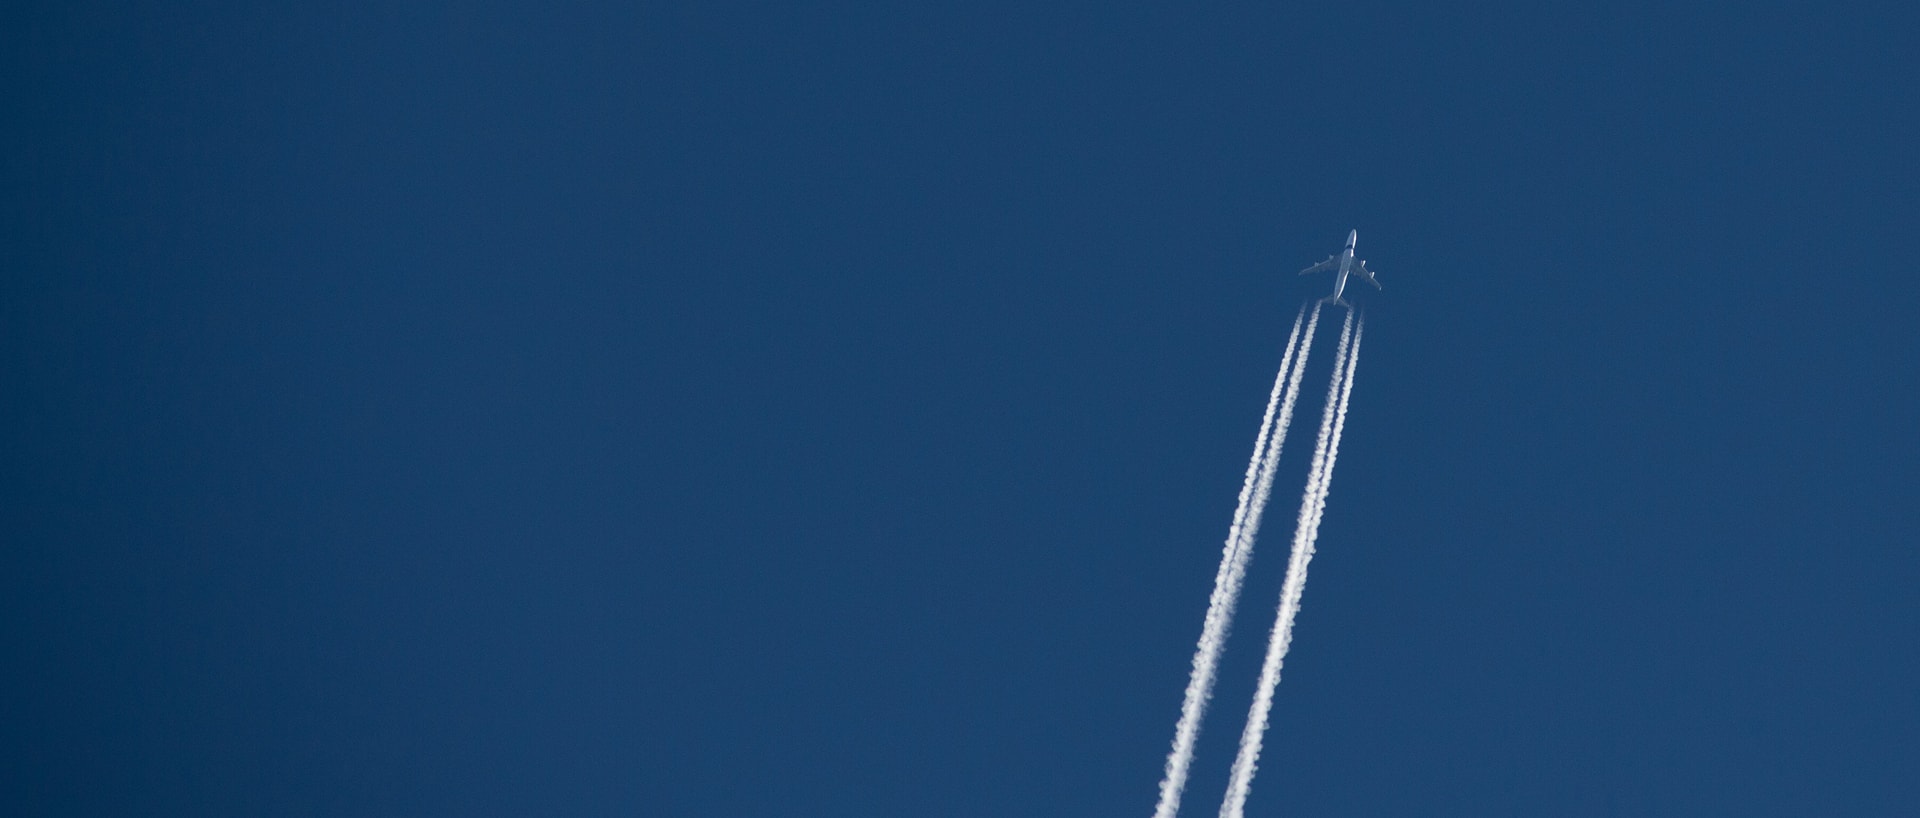 Airplane rising against a blue sky